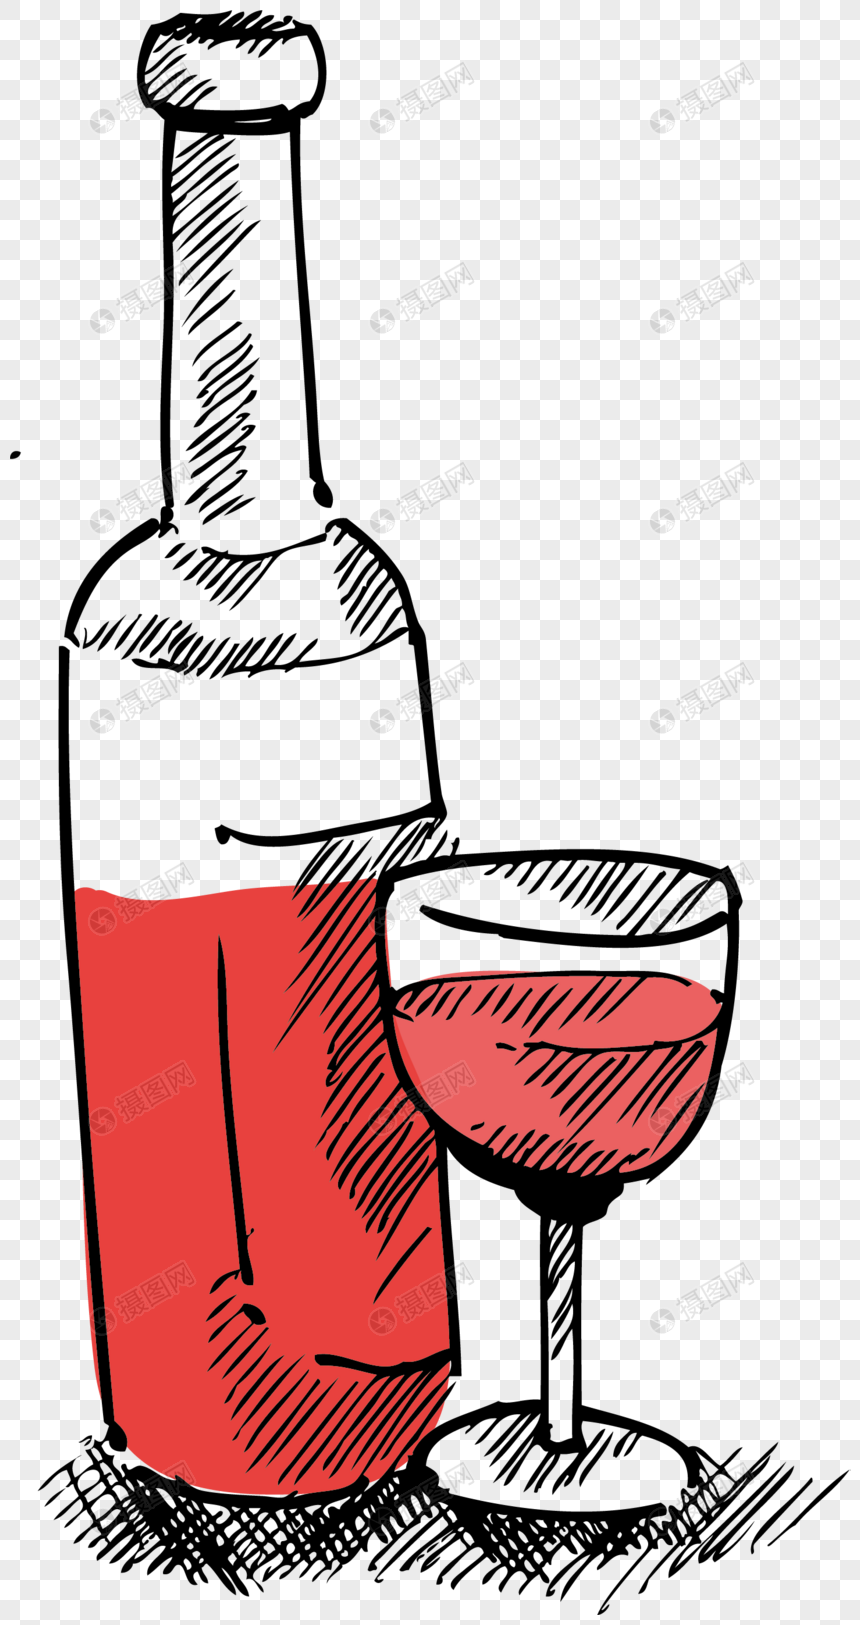 63 Gambar Kartun Anggur Merah Terlihat Keren Gambar Pixabay